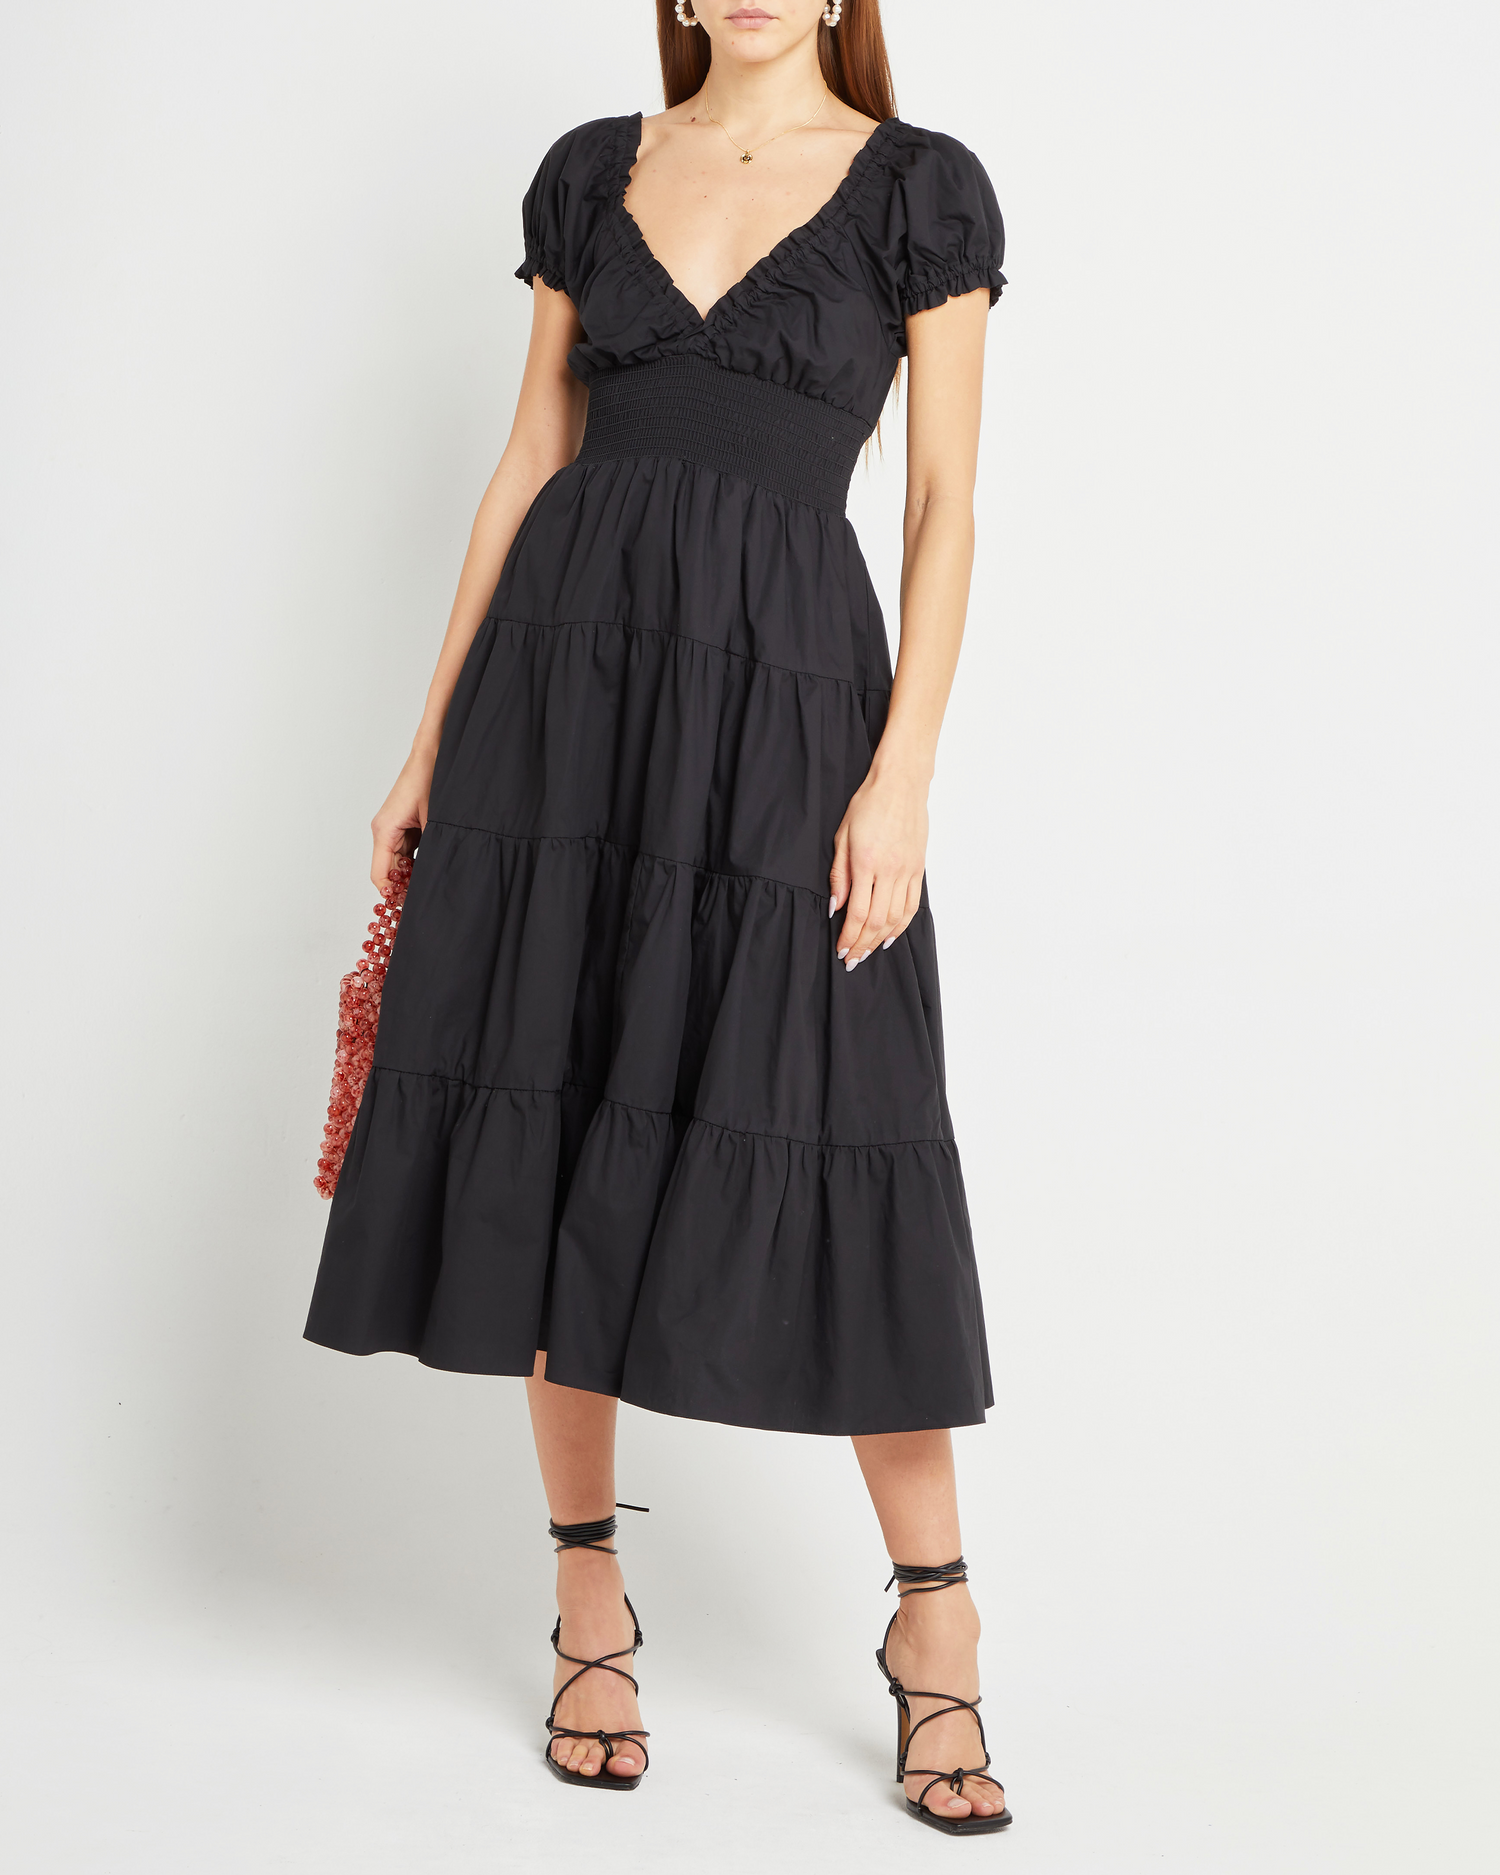 Sixth image of Cotton Delia Dress, a black midi dress, V-neck, ruffle, cap sleeves, short sleeves, tiered